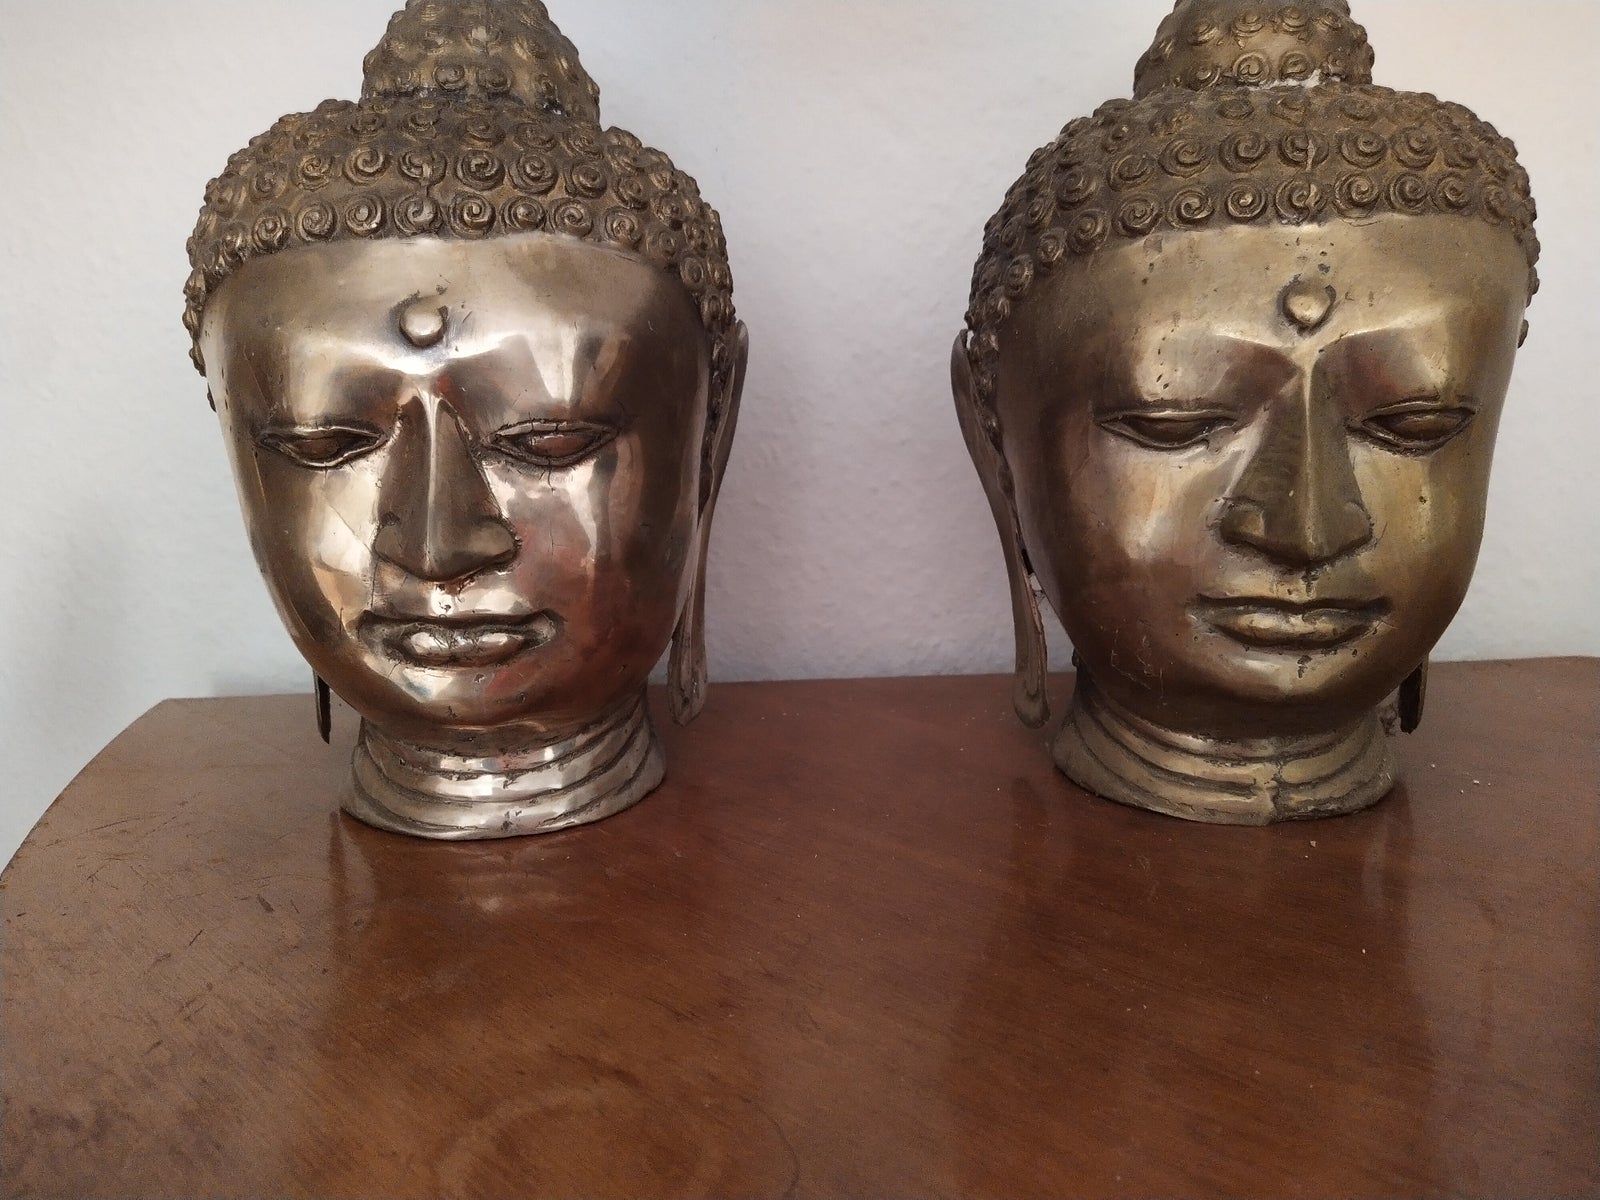 Buddha hoved fra Bali Højde ca. 25 cm